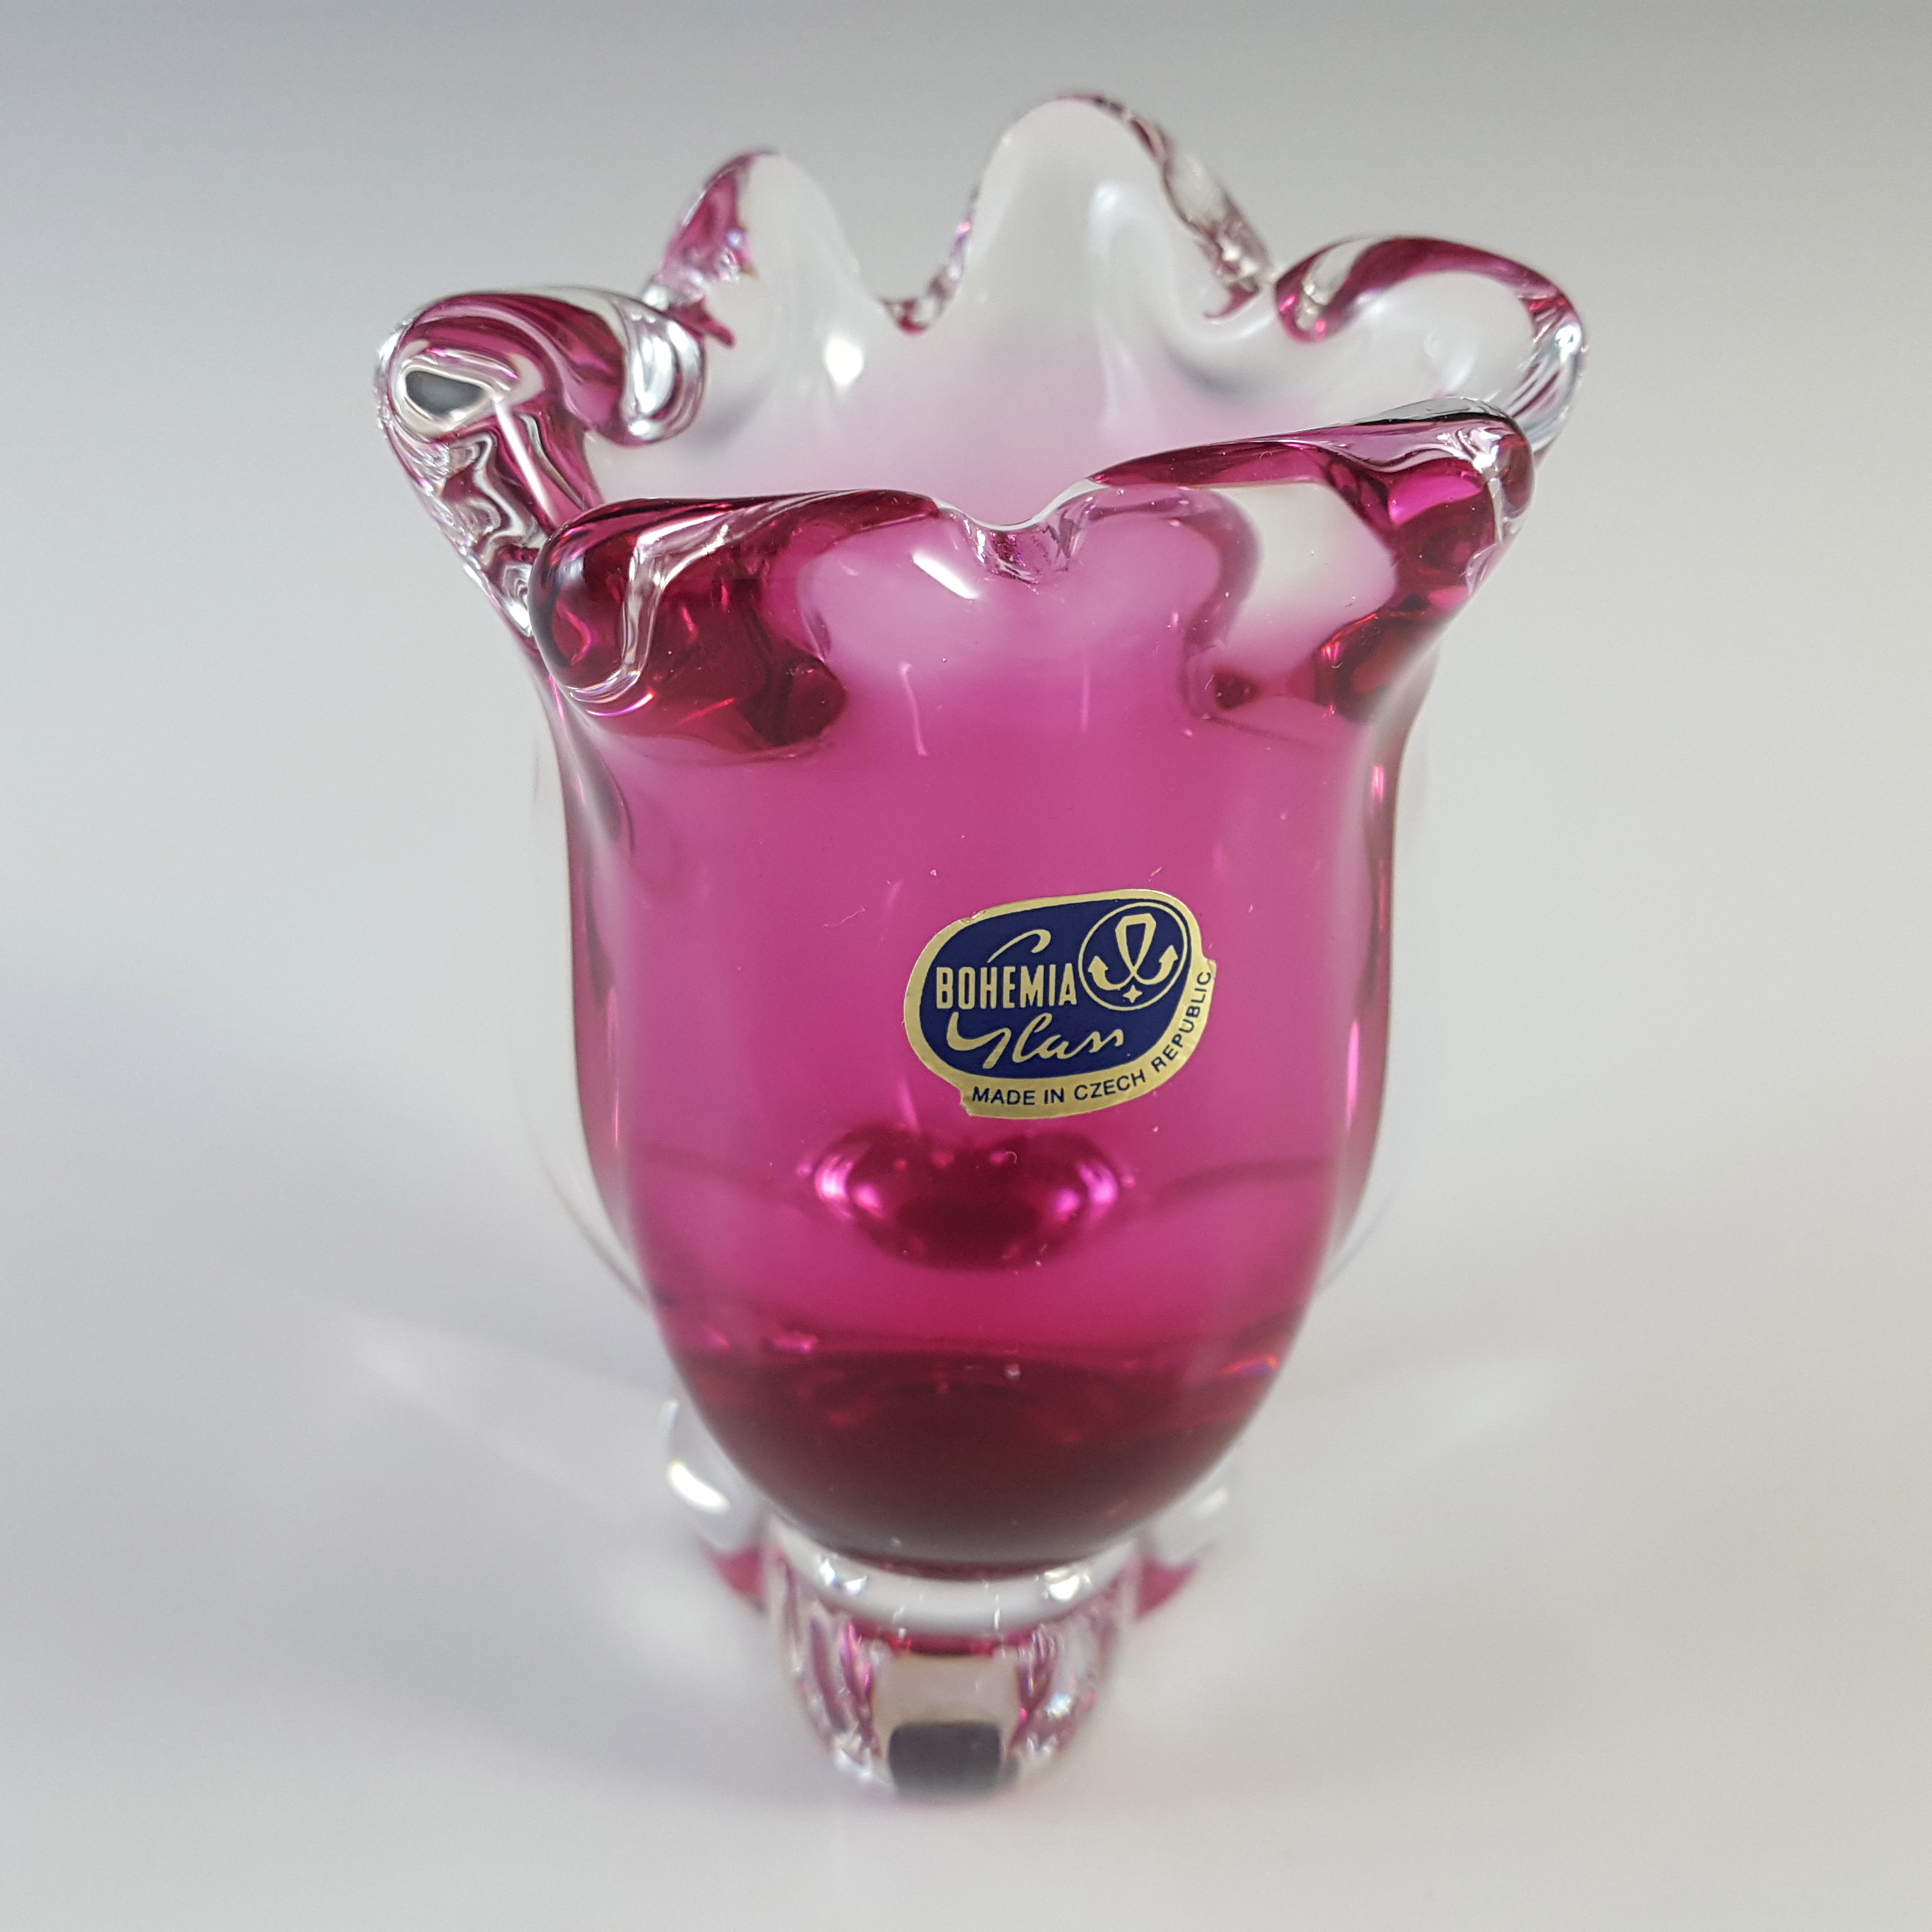 Chřibská #331/3/10 Czech Pink & Clear Glass Vintage Vase - Click Image to Close